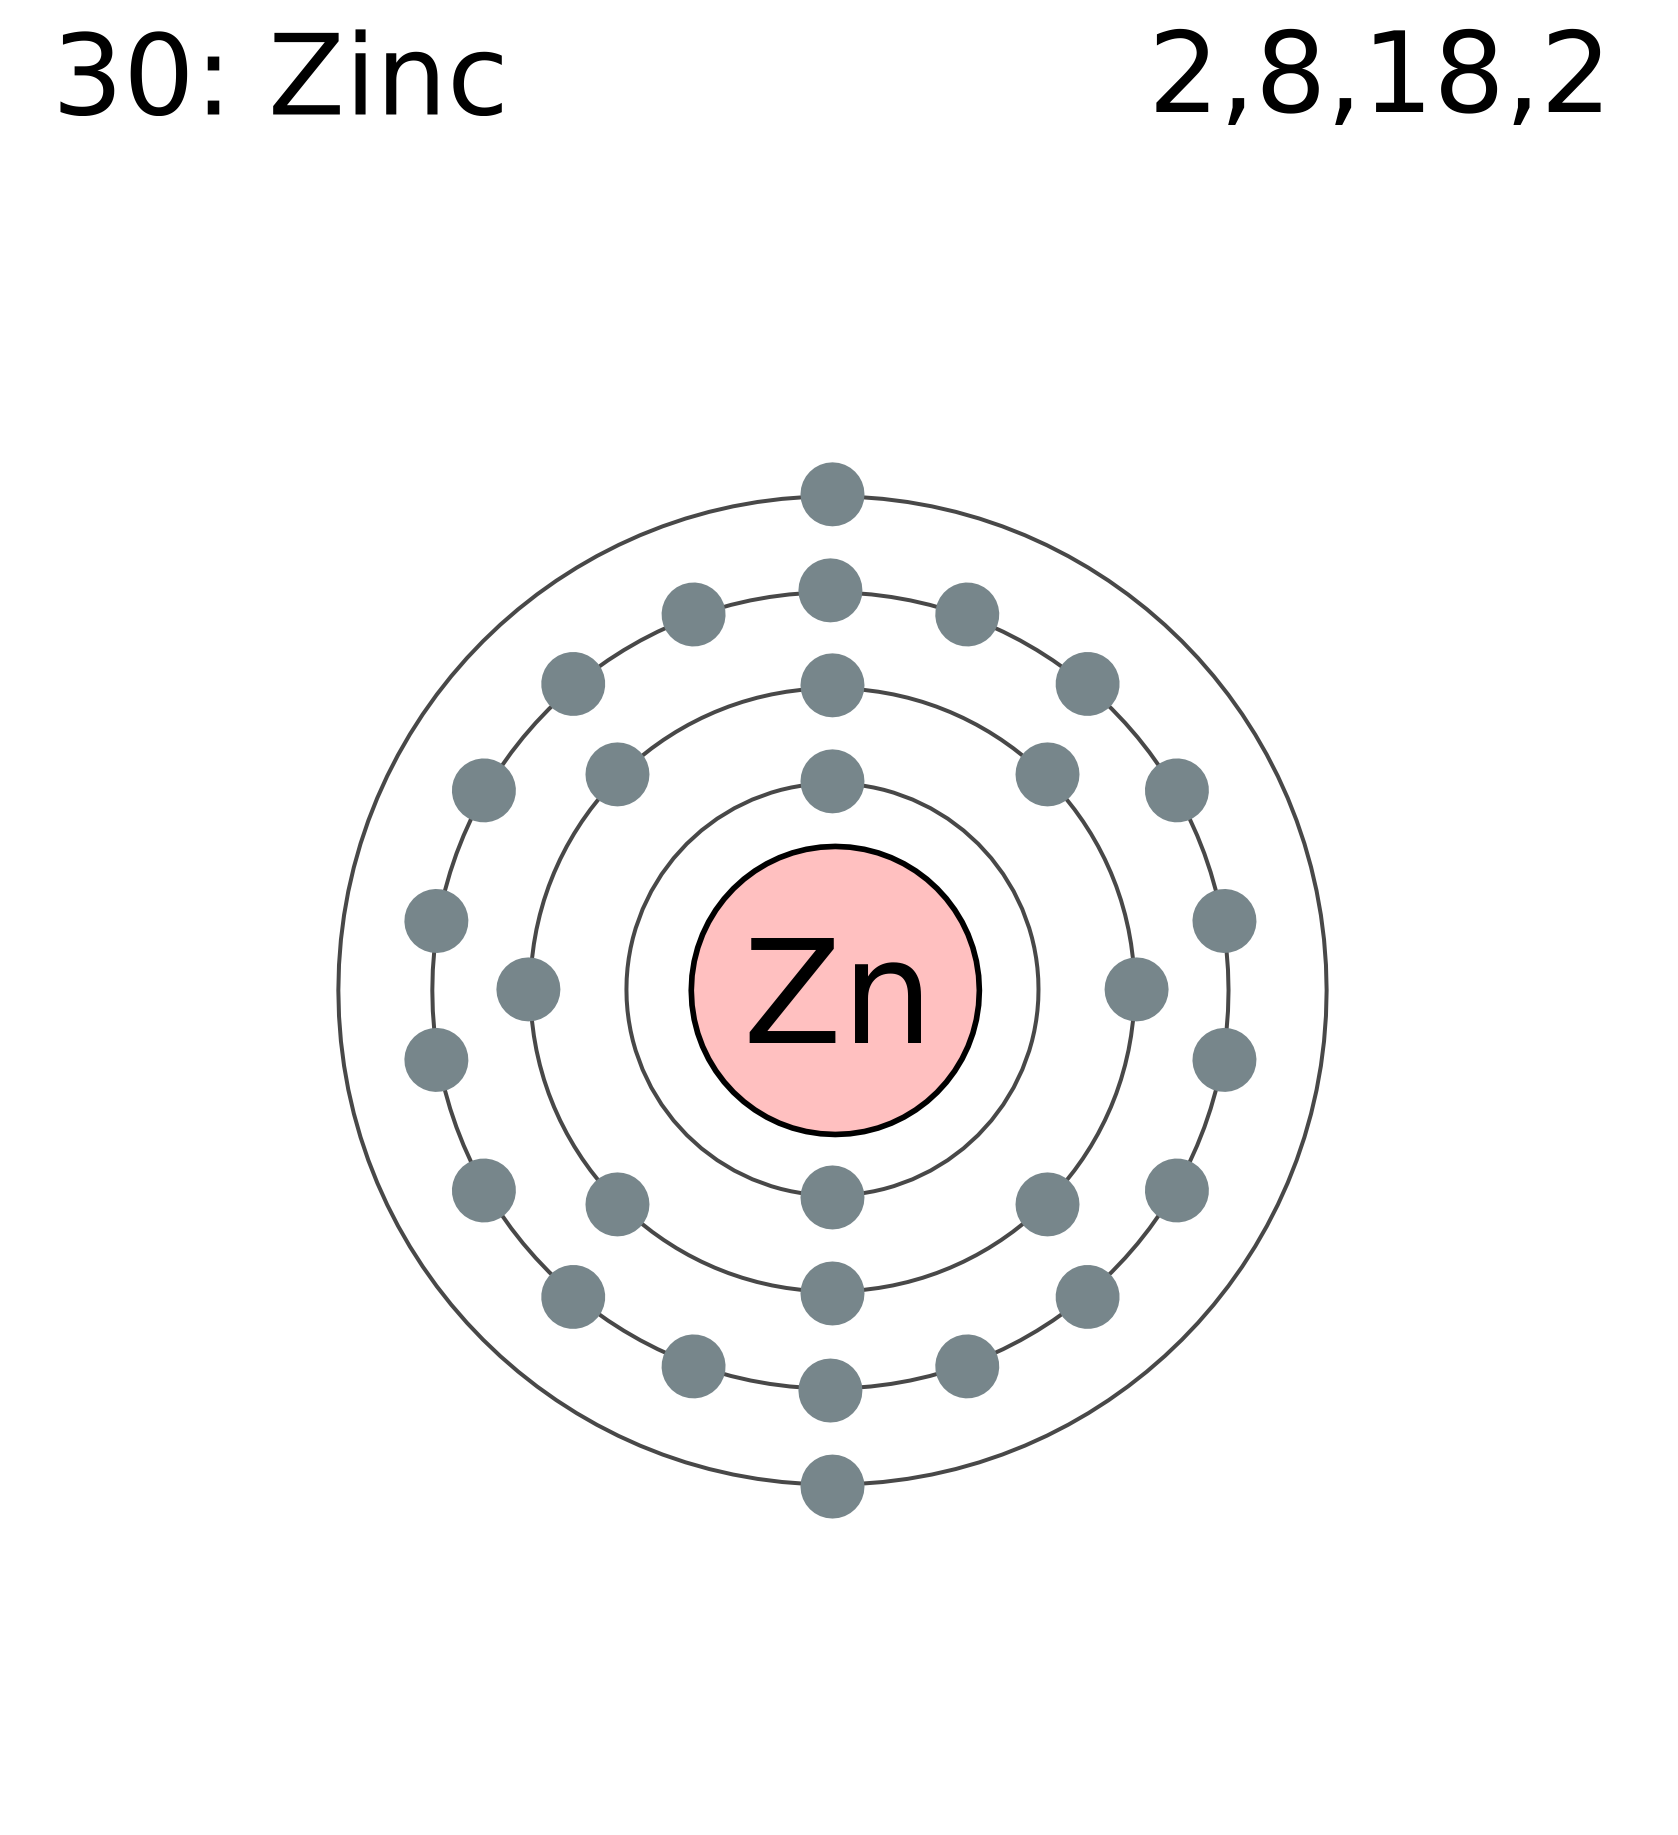 Elemental Zinc